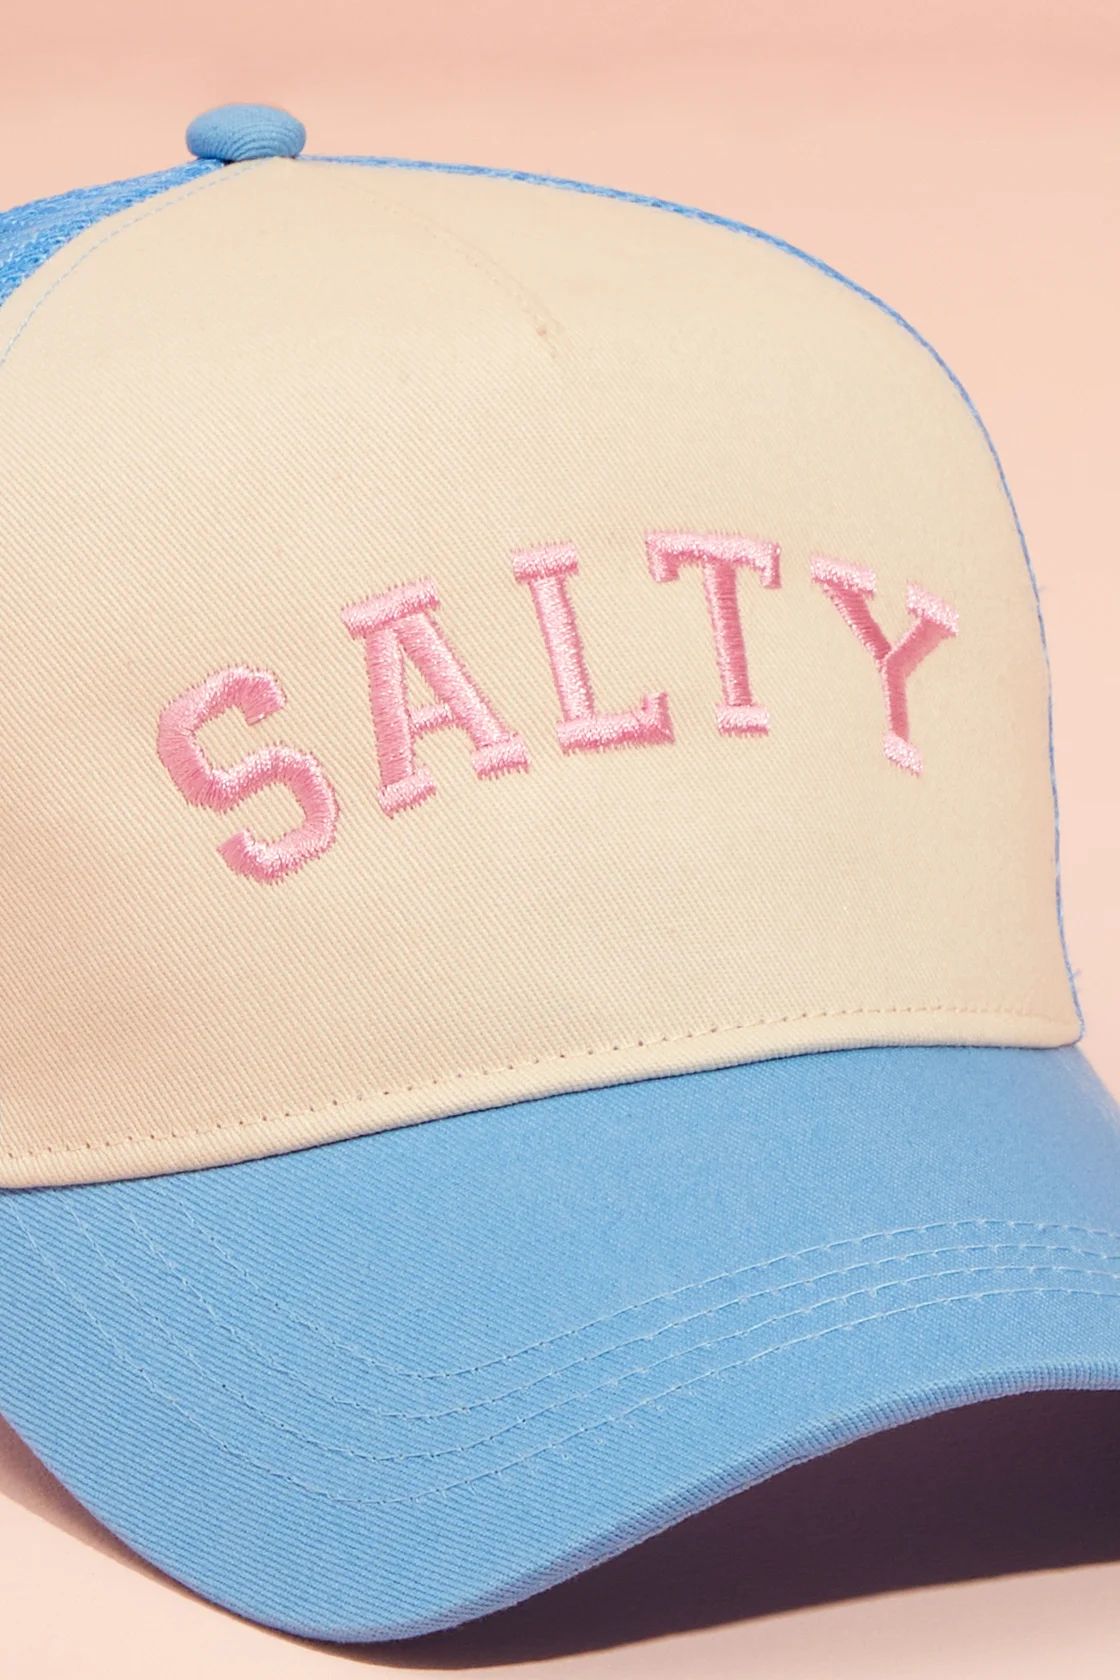 Salty Trucker Hat in Light Blue | Altar'd State | Altar'd State